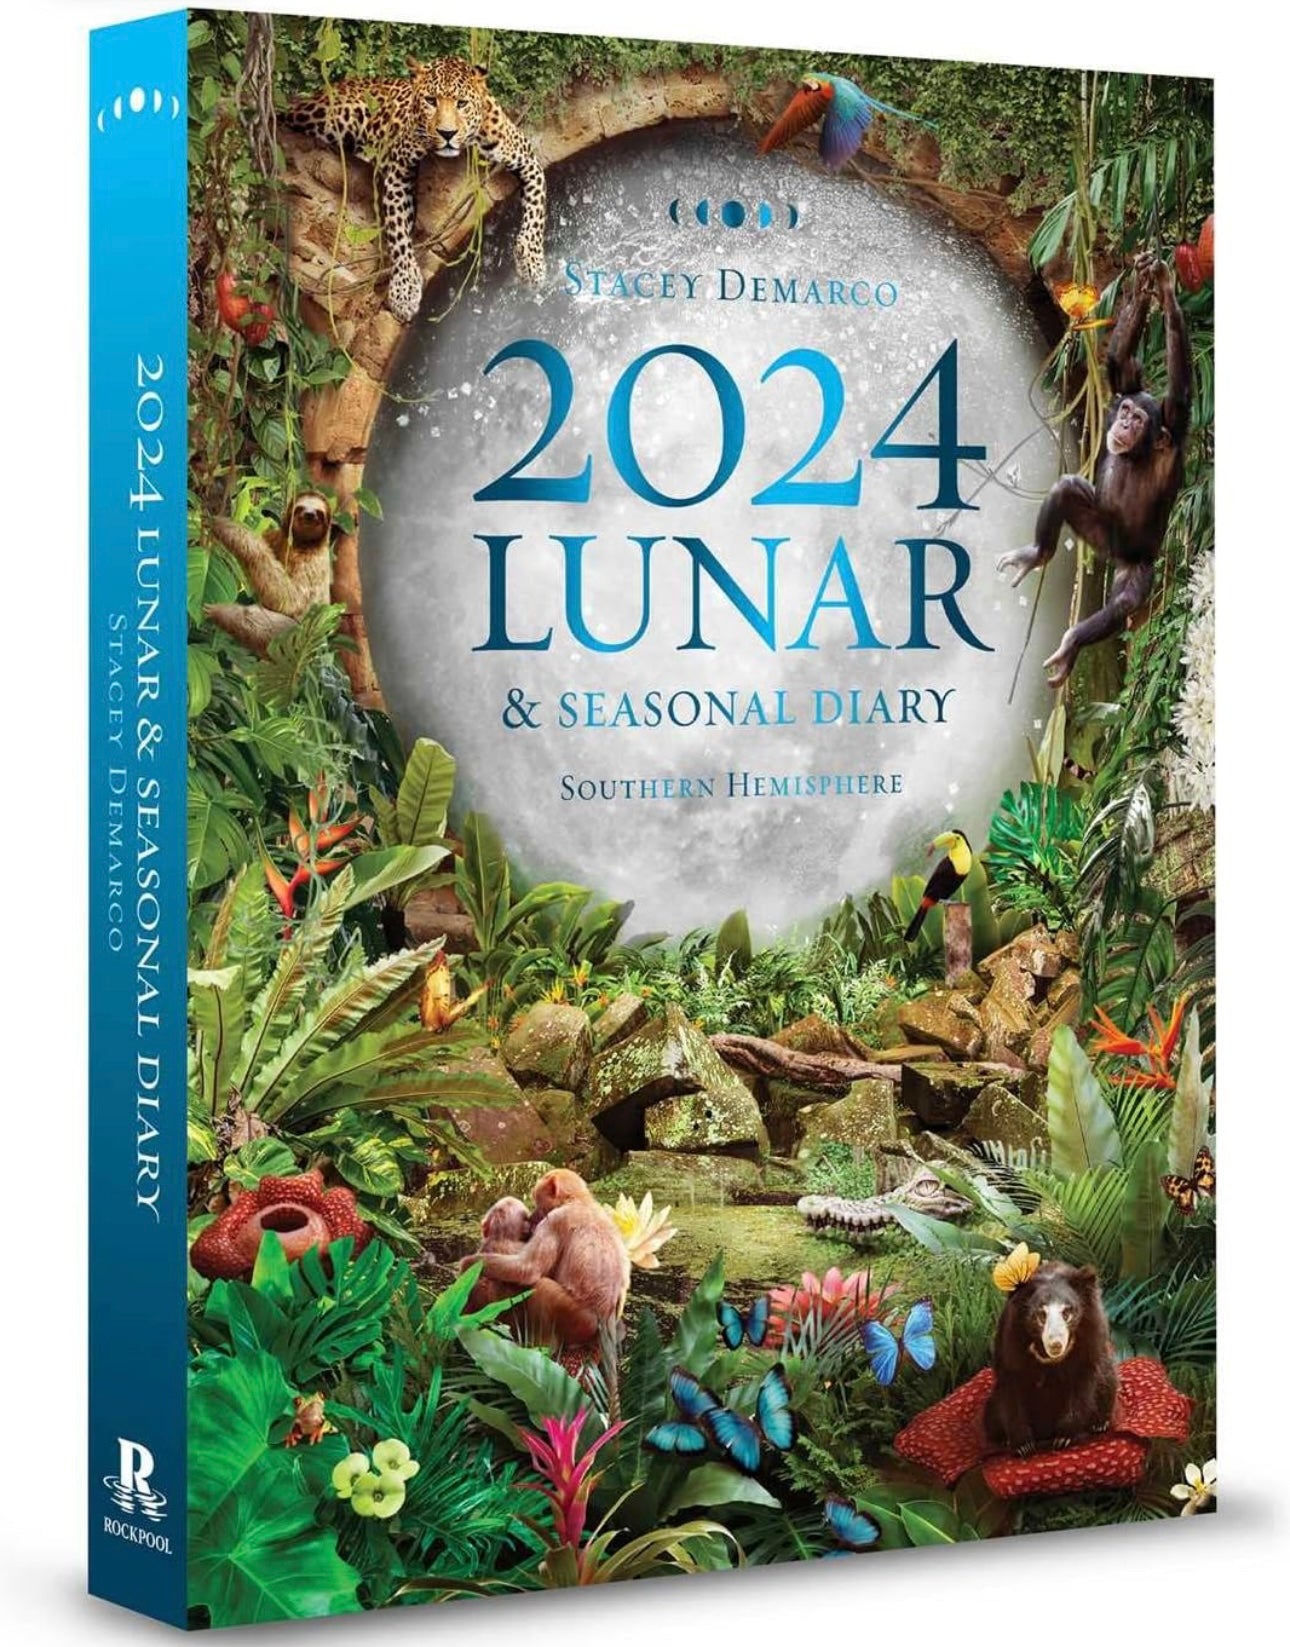 2024 Luna and seasons diary